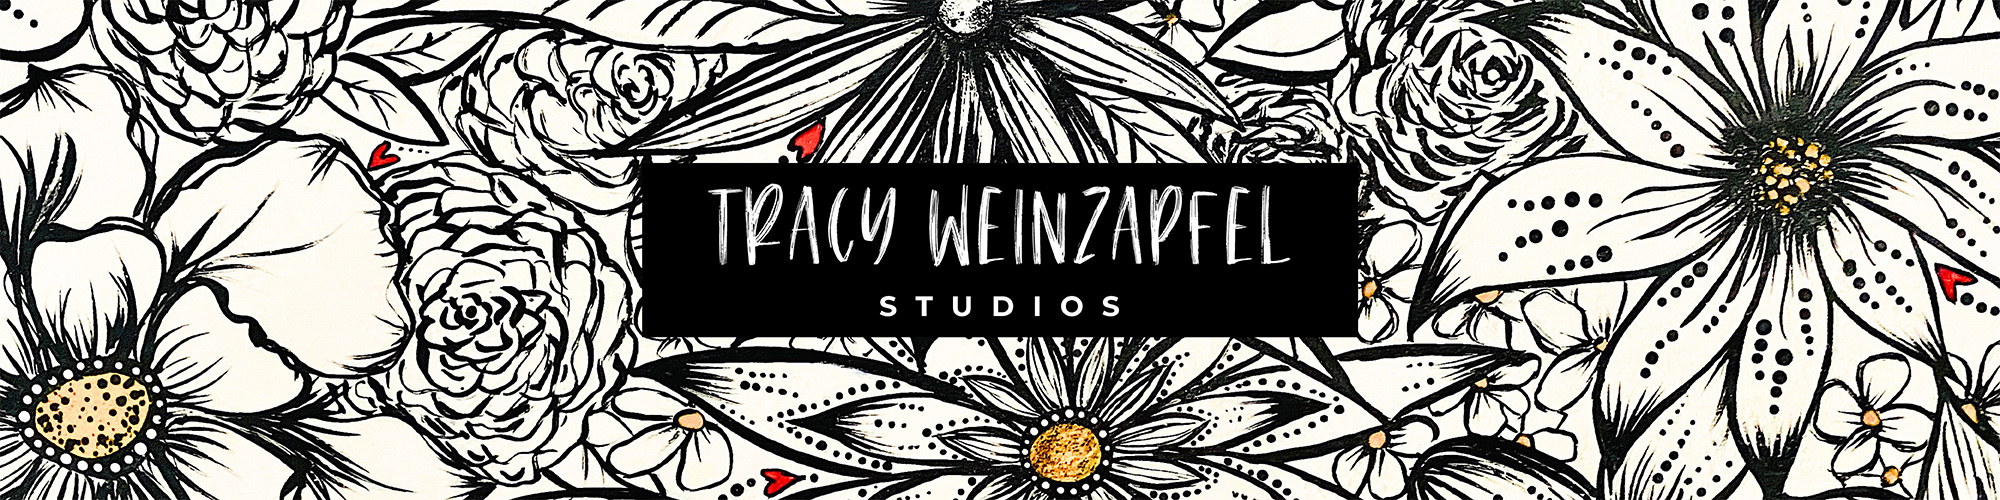 Tracy Weinzapfel Studios Art USA